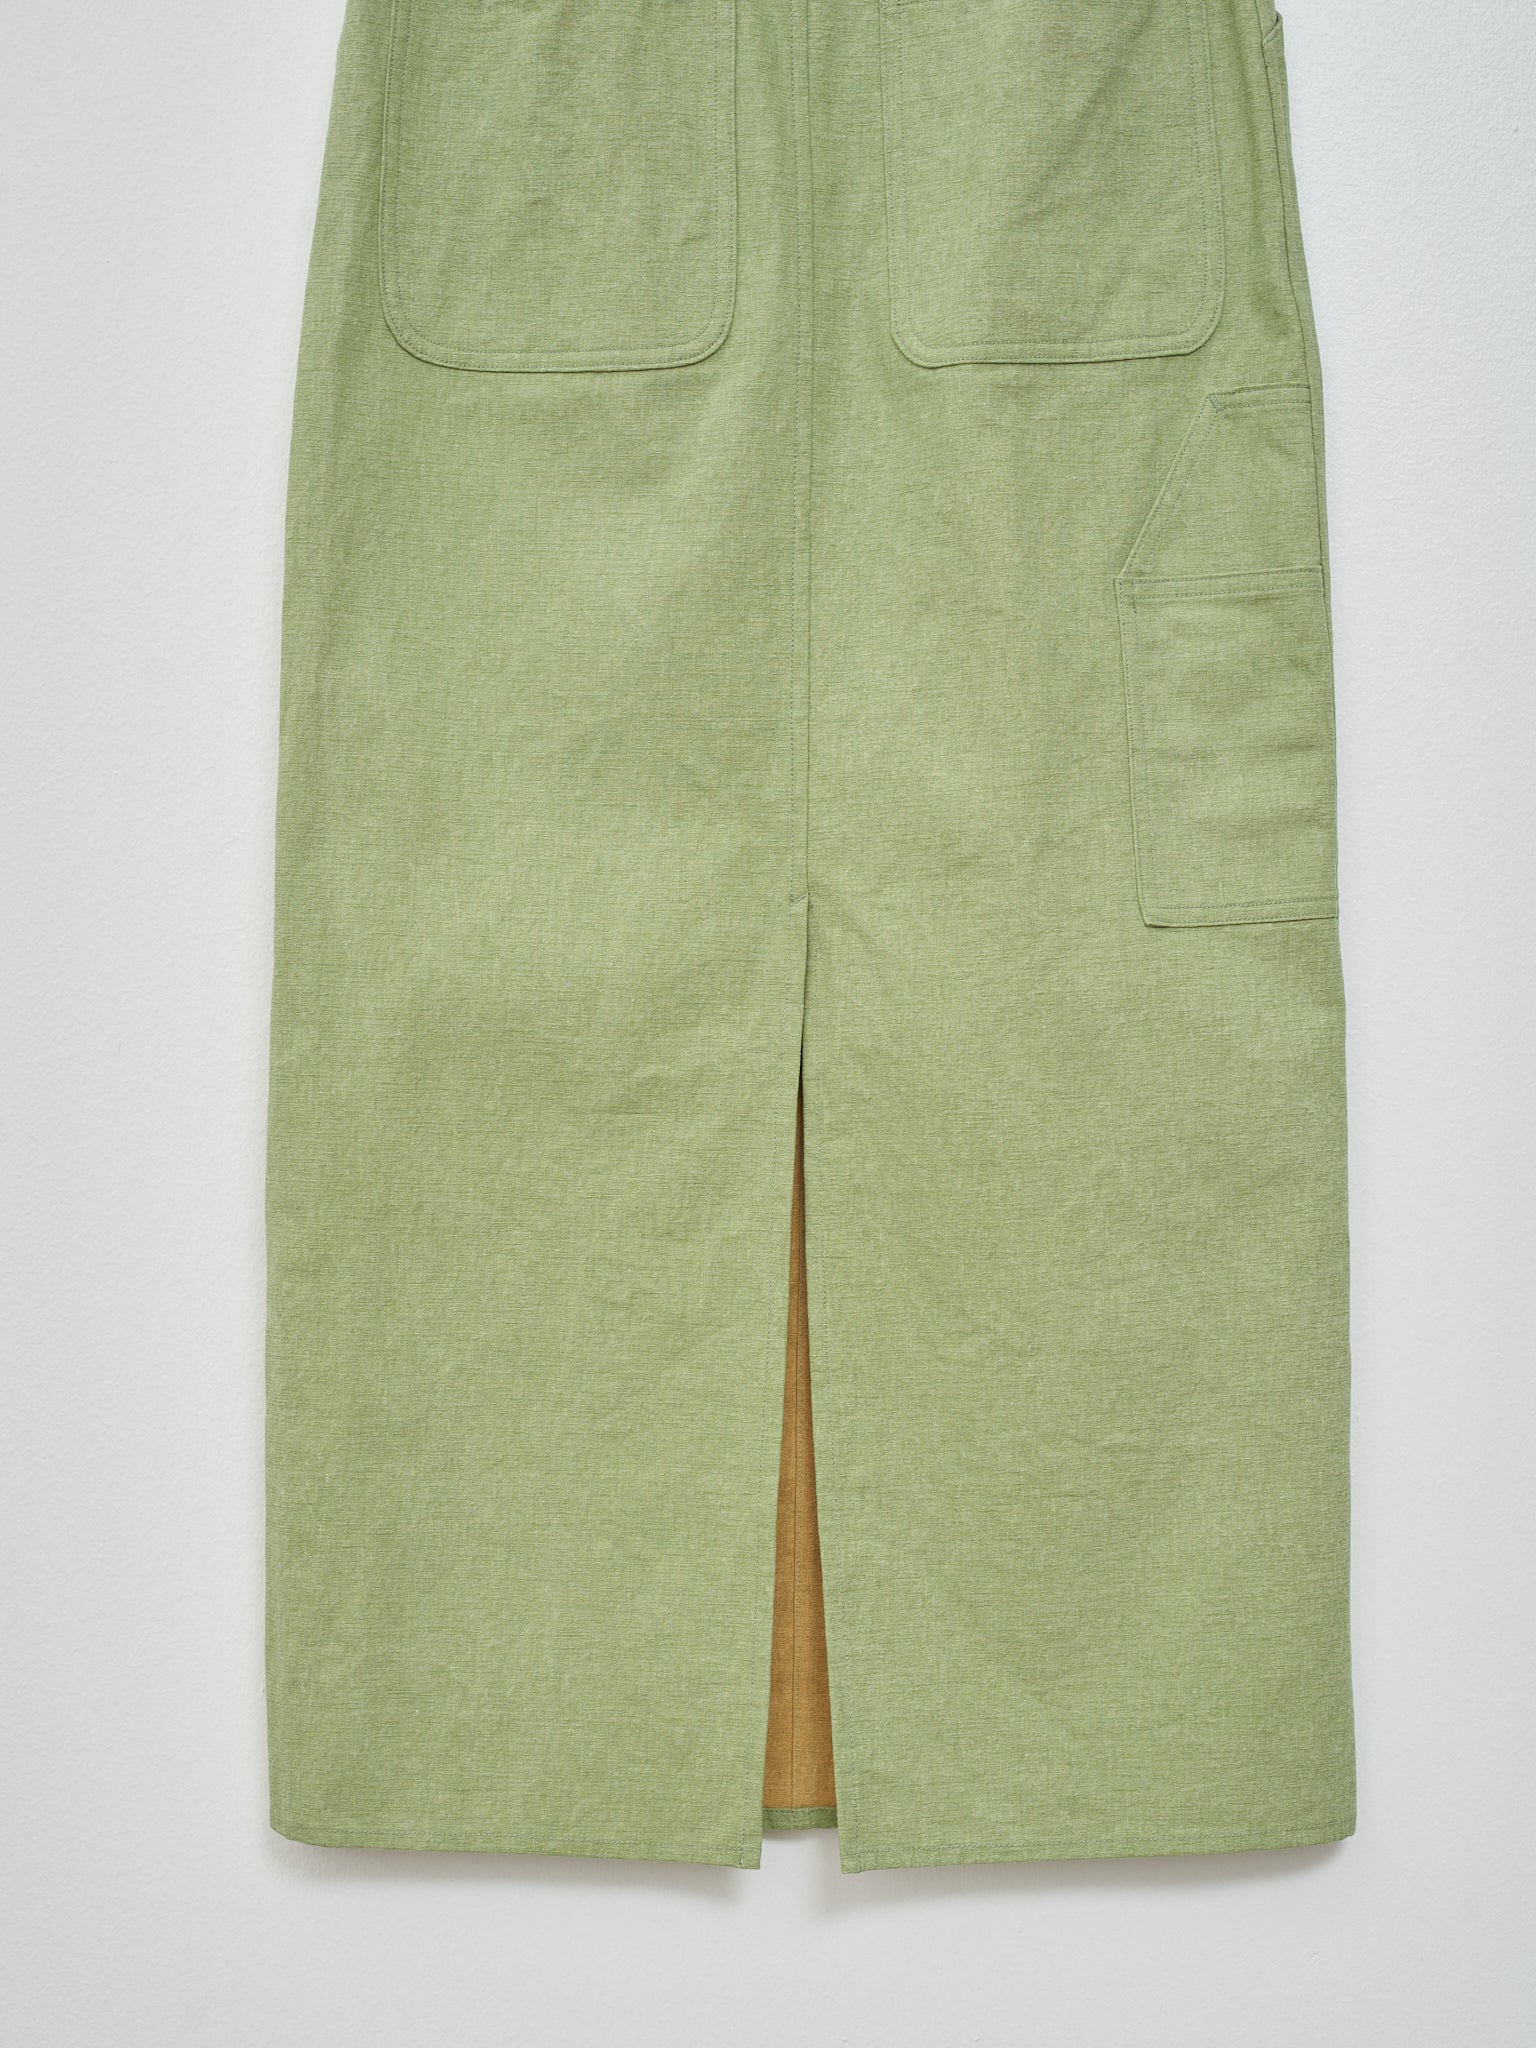 Namu Shop - Auralee Washed Hard Twist Canvas Skirt - Green